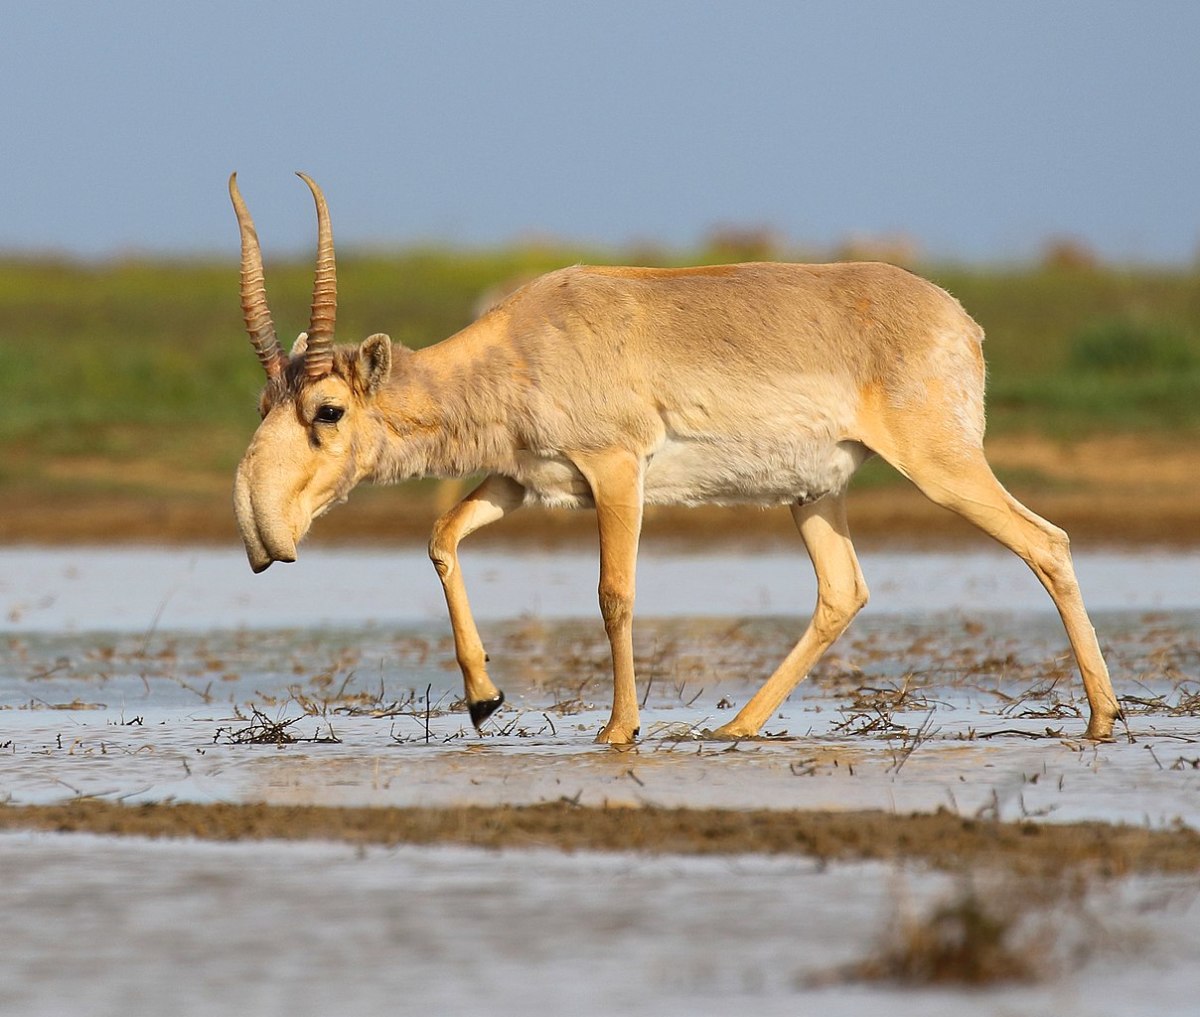 Russian saiga antelope